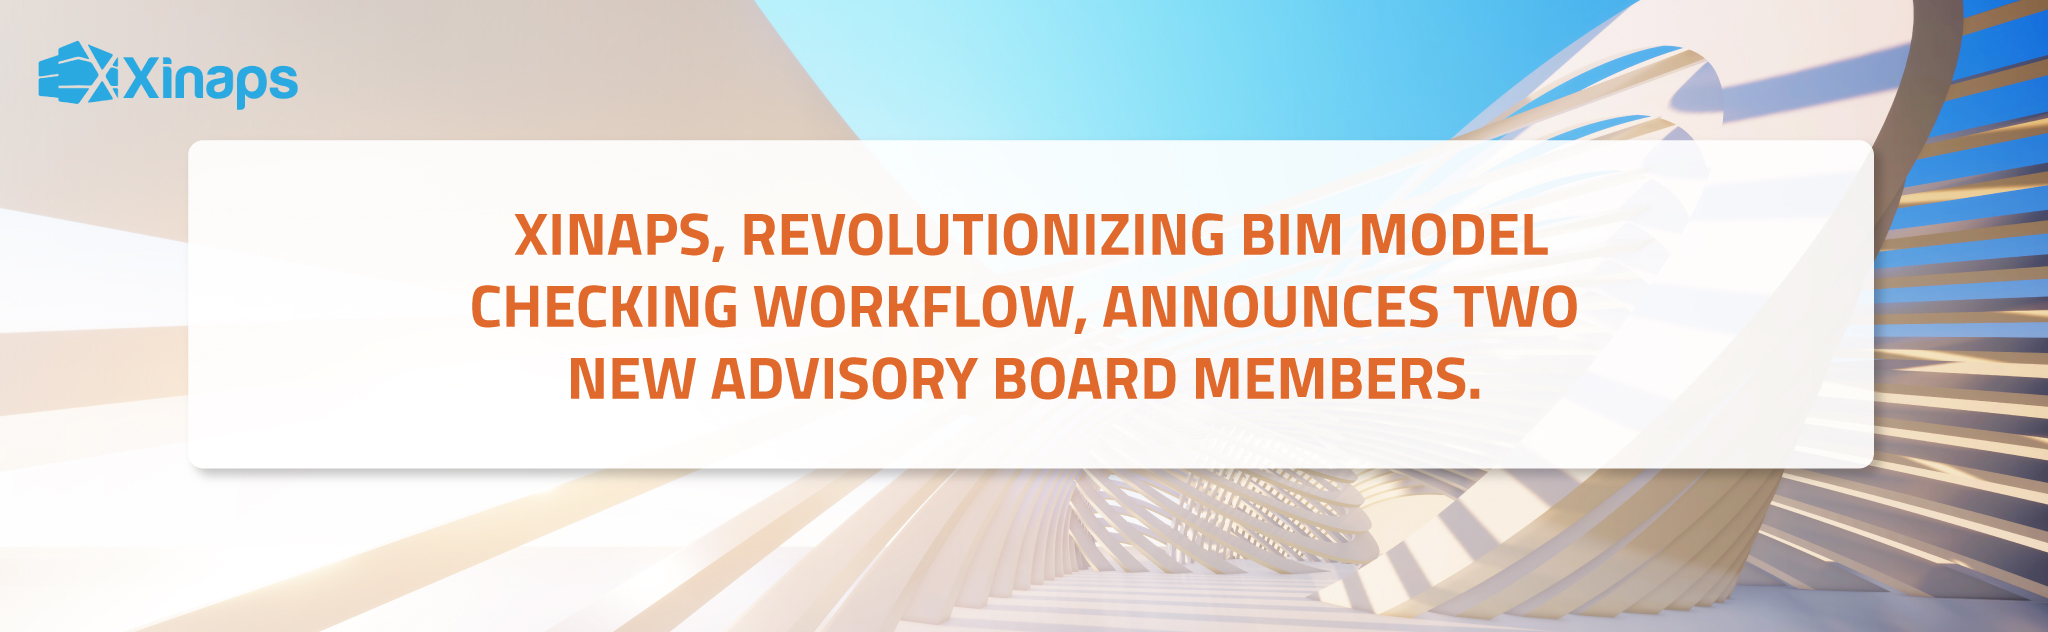 Xinaps, revolutionizing BIM model checking workflow announces two new advisory board members.